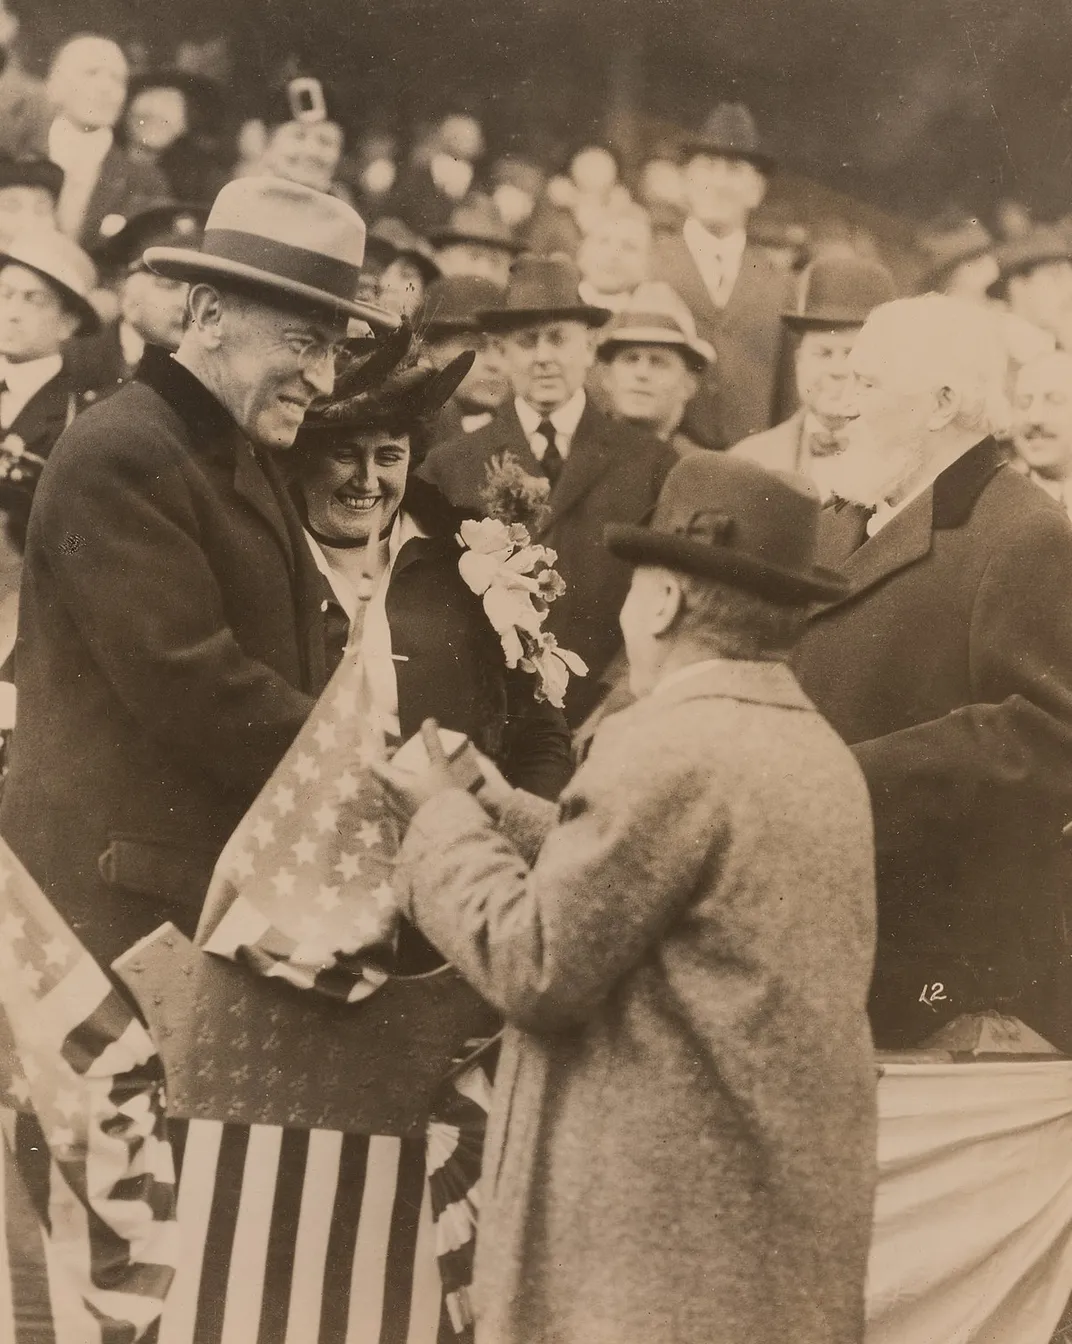 Woodrow and Edith, circa 1919